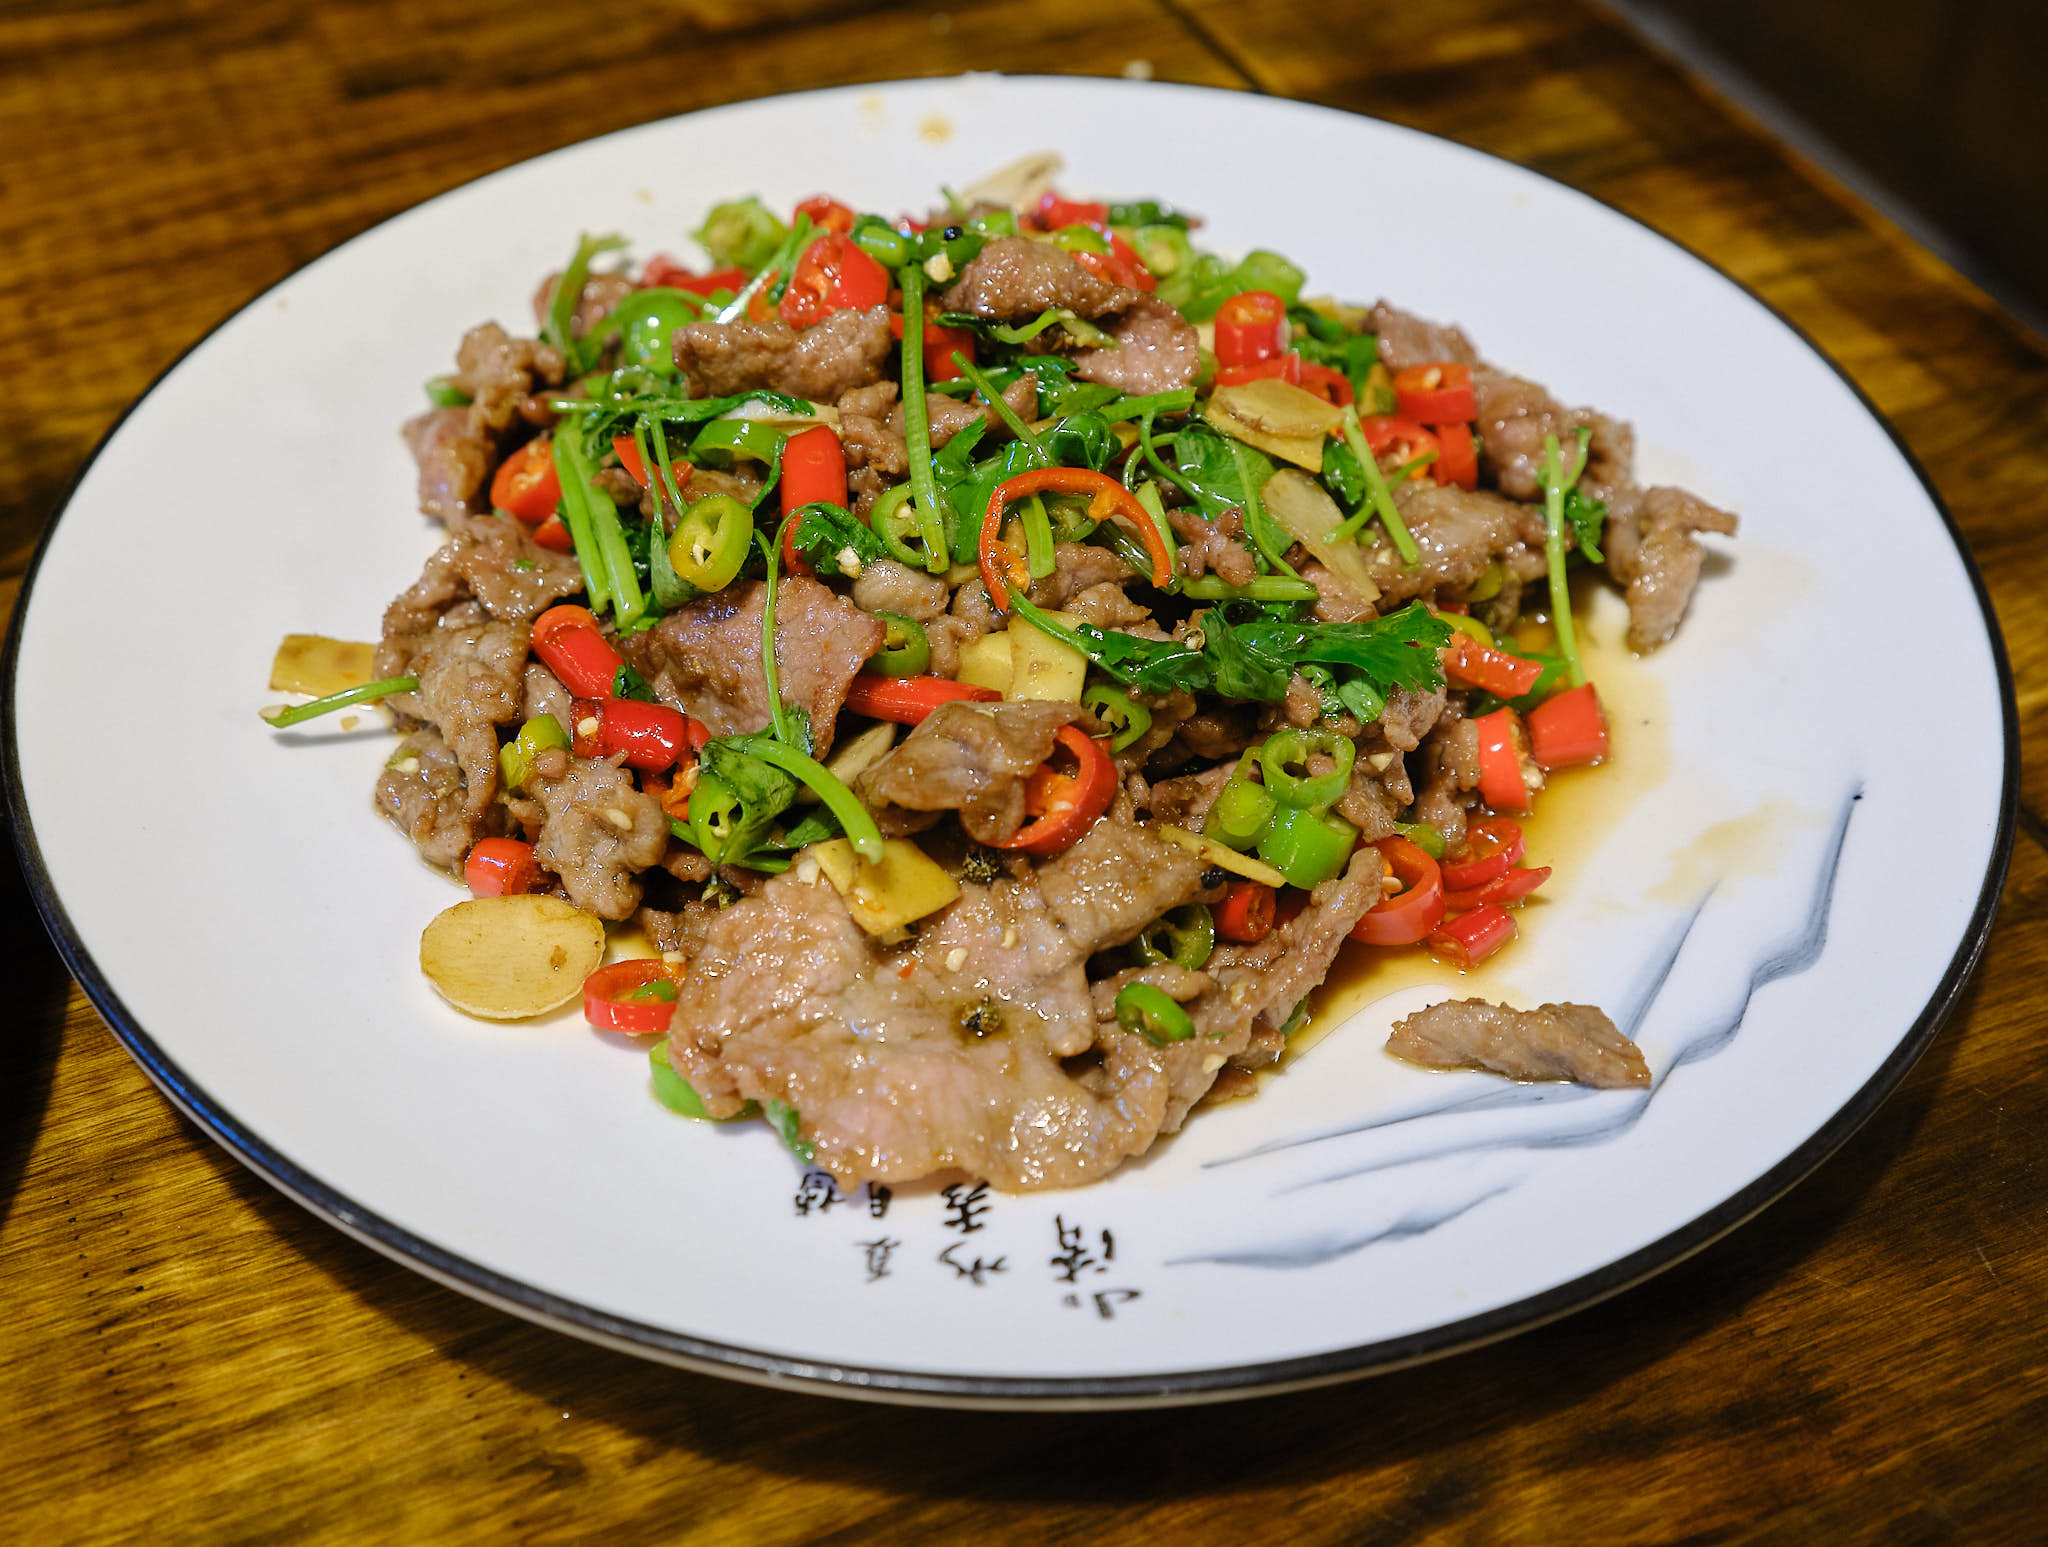 Spicy Chengdu style beef dish